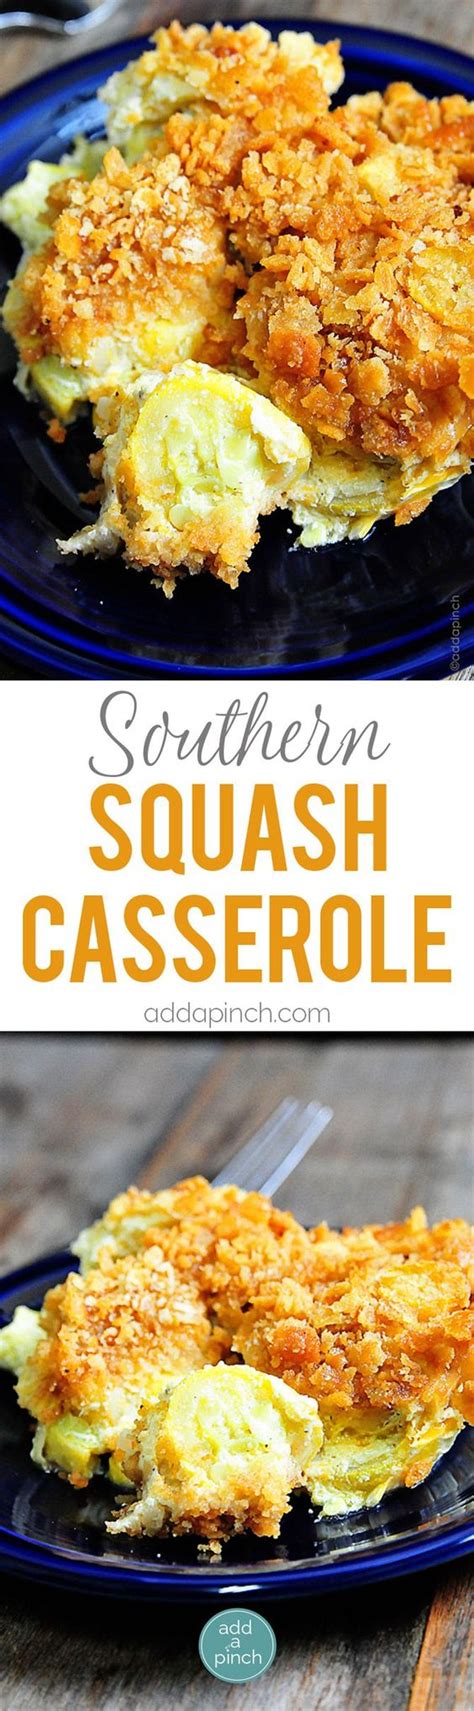 Squash Casserole Recipe Add A Pinch Robyn Stone Recipes Squash